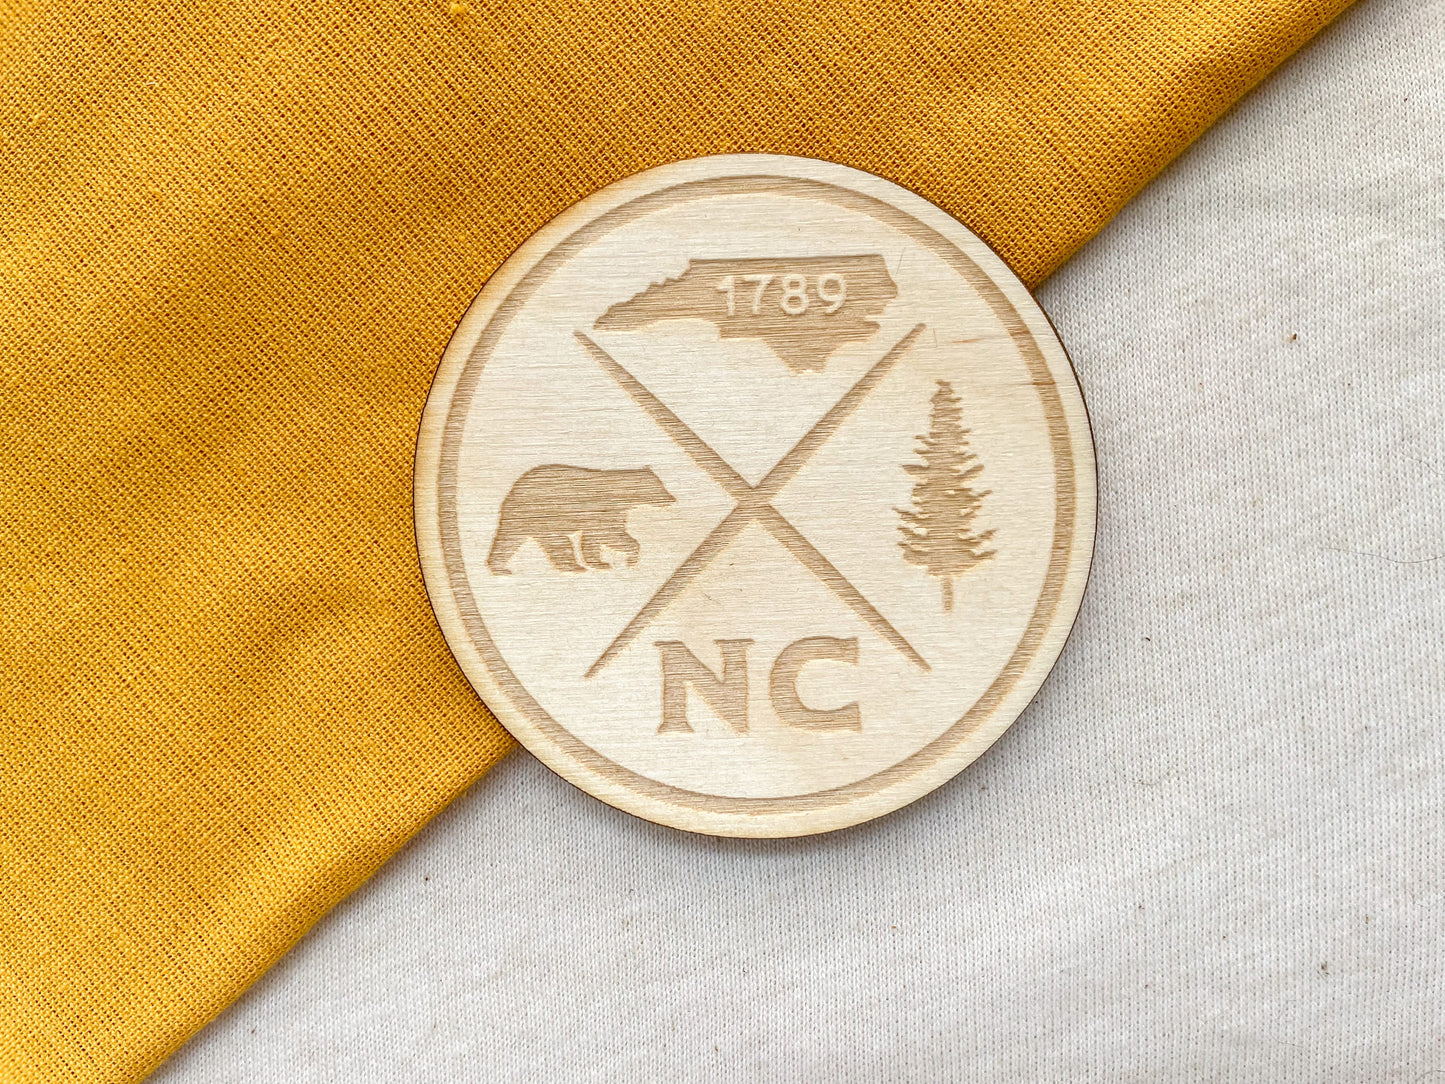 North Carolina Badge Magnet